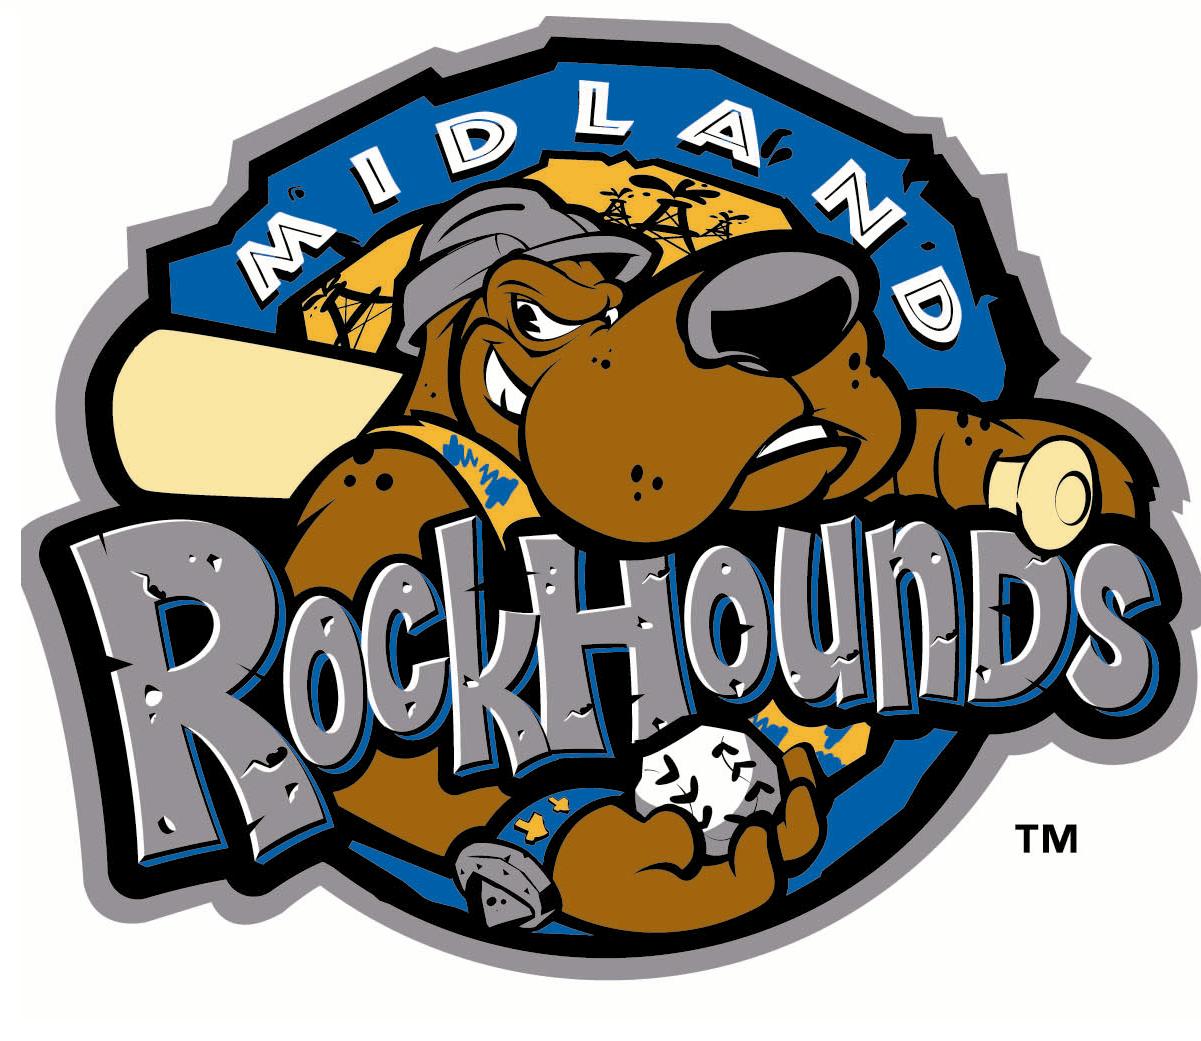 Midland Rockhounds ESPN